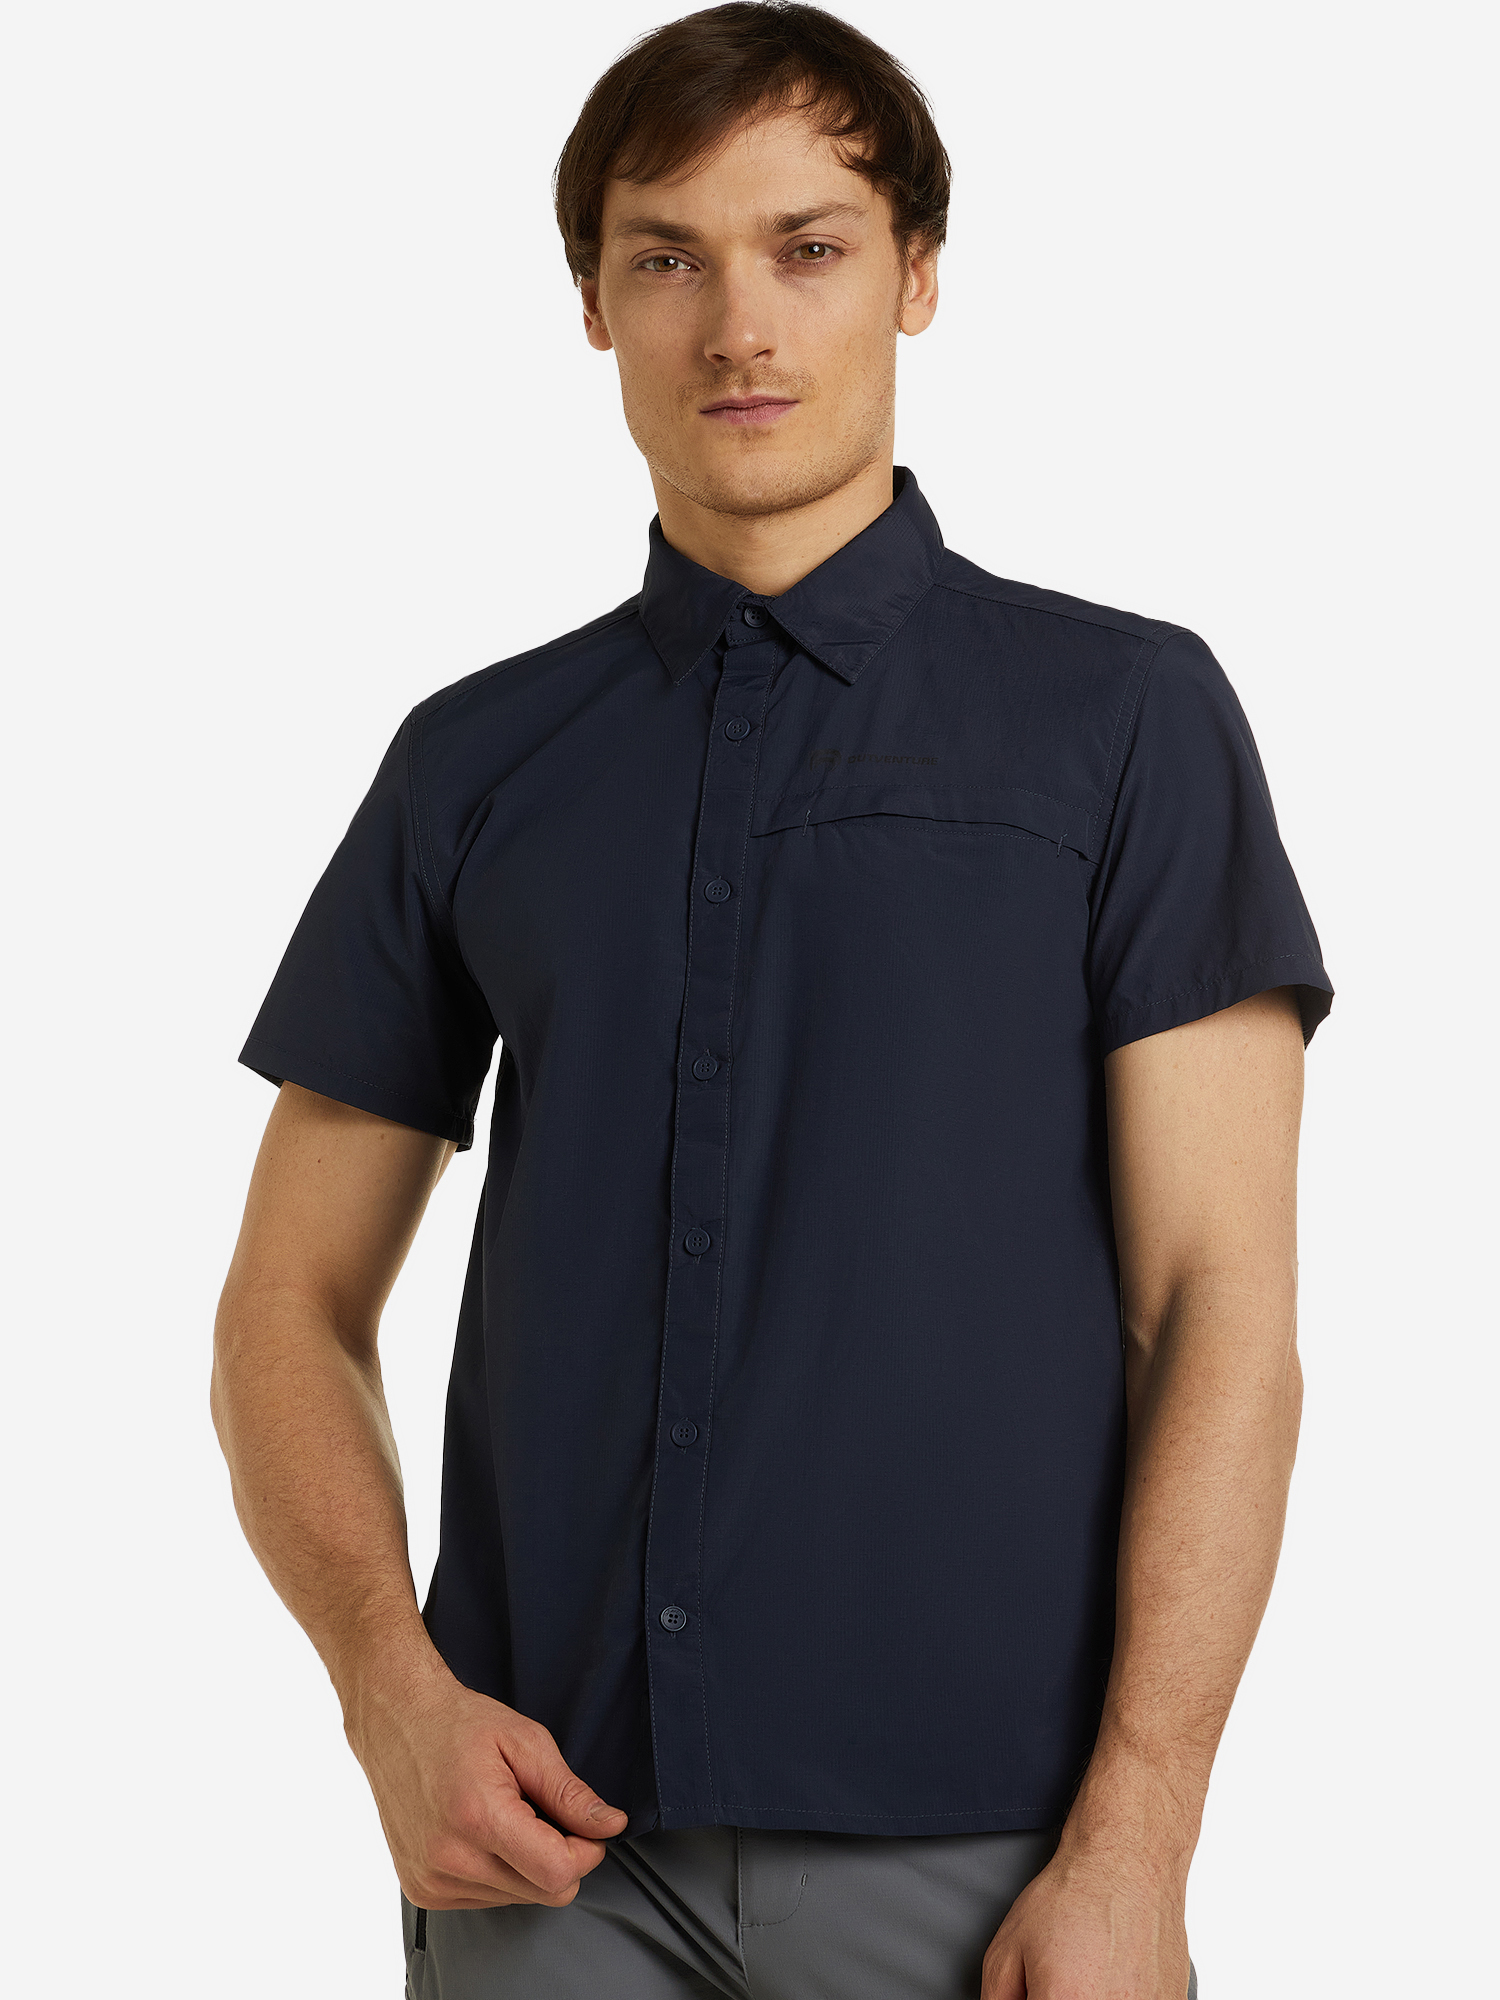 Рубашка с коротким рукавом мужская Outventure, Синий рубашка мужская outventure синий